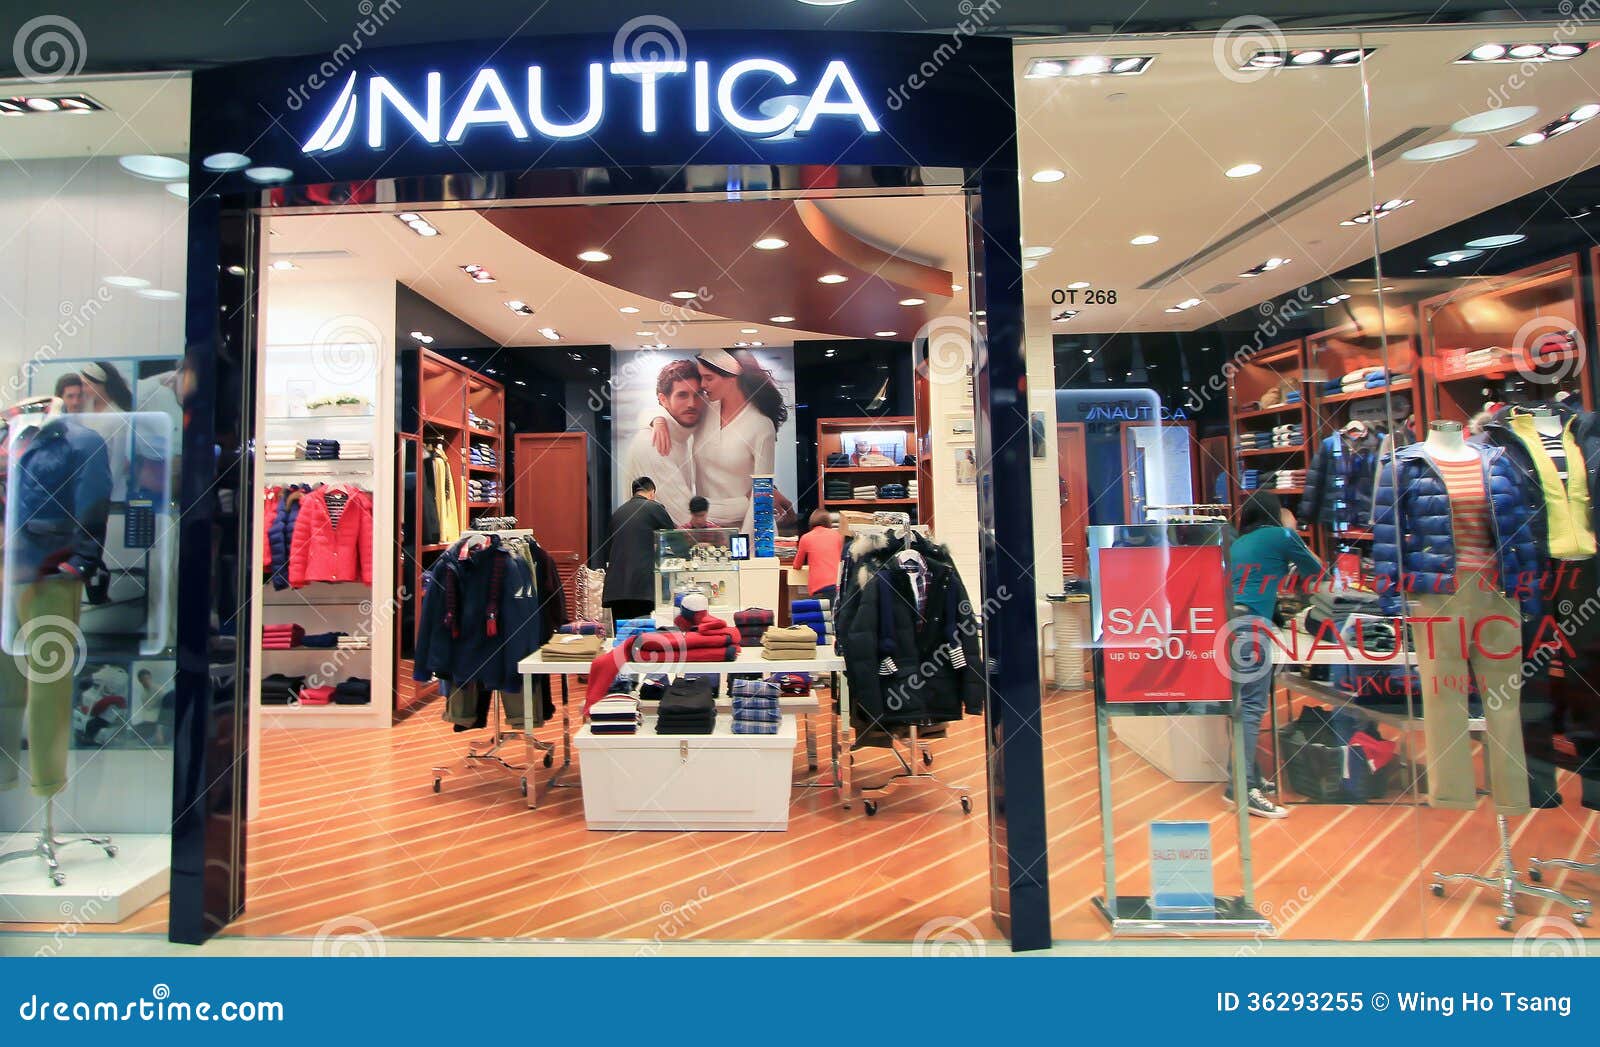 Nautica shop in hong kong editorial image. Image of mall - 36293255